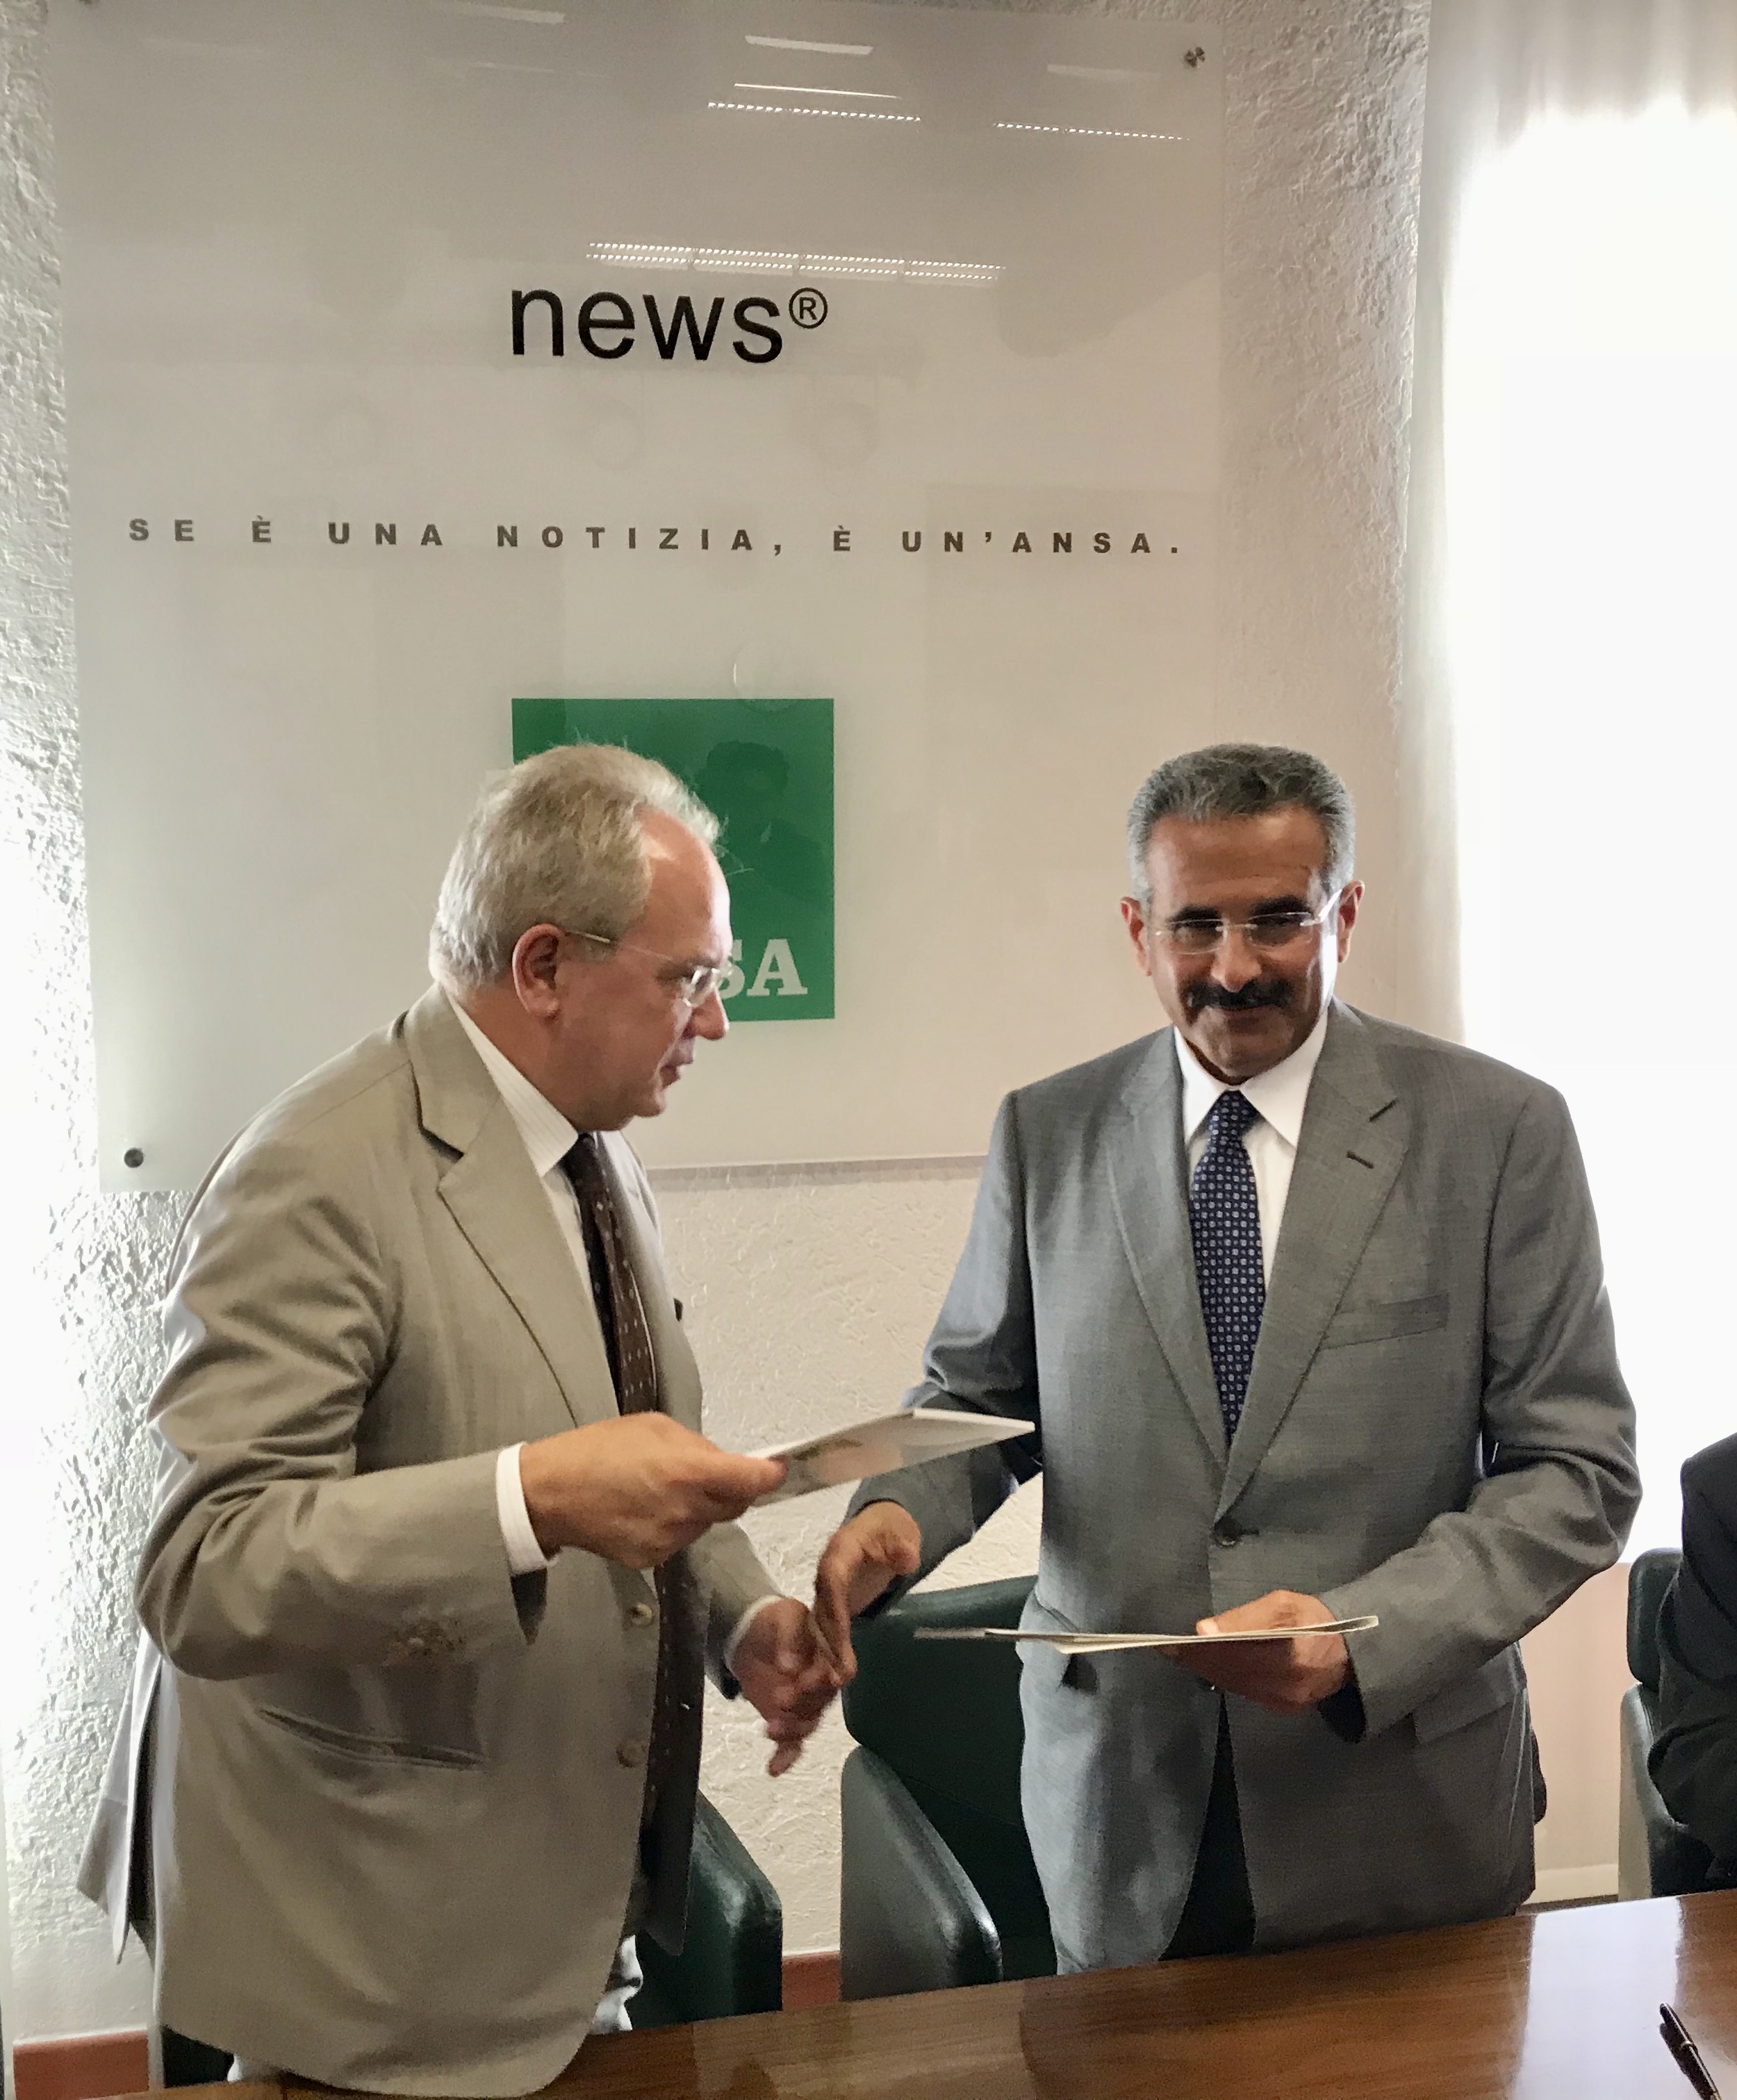 FANA President and General Director of the Kuwaiti News Agency (KUNA) Sheikh Mubarak Duaij Al-Ibrahim Al-Sabah and ANSA's Director General Giuseppe Cerbone during the signature ceremony